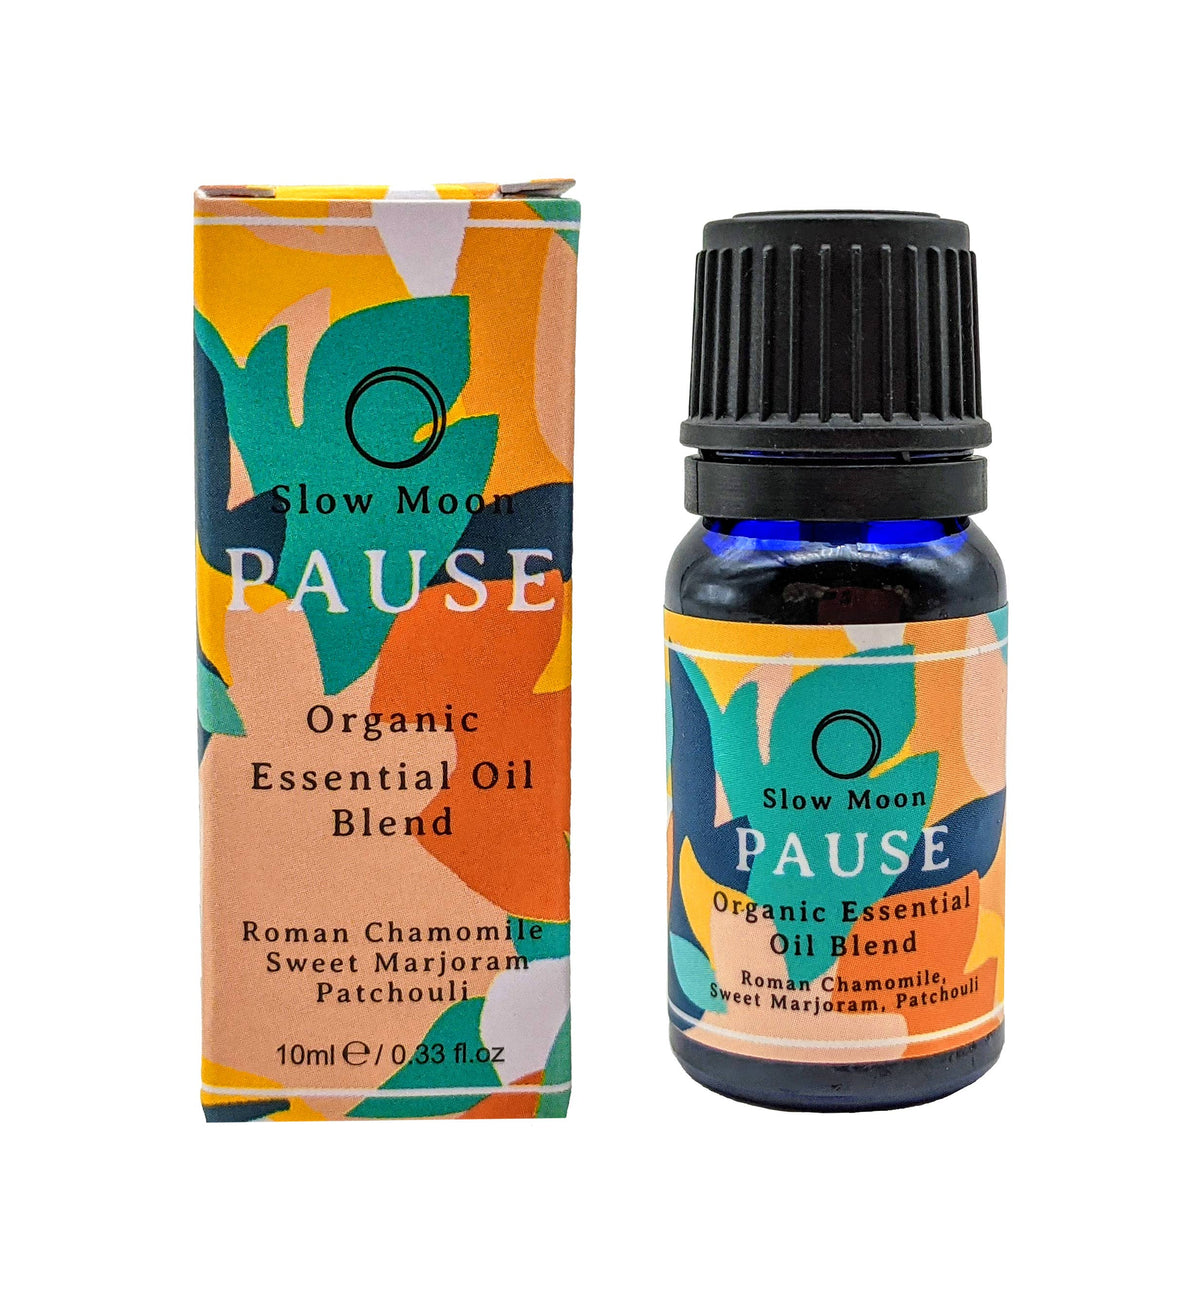 Organic essential oil blend - Pause